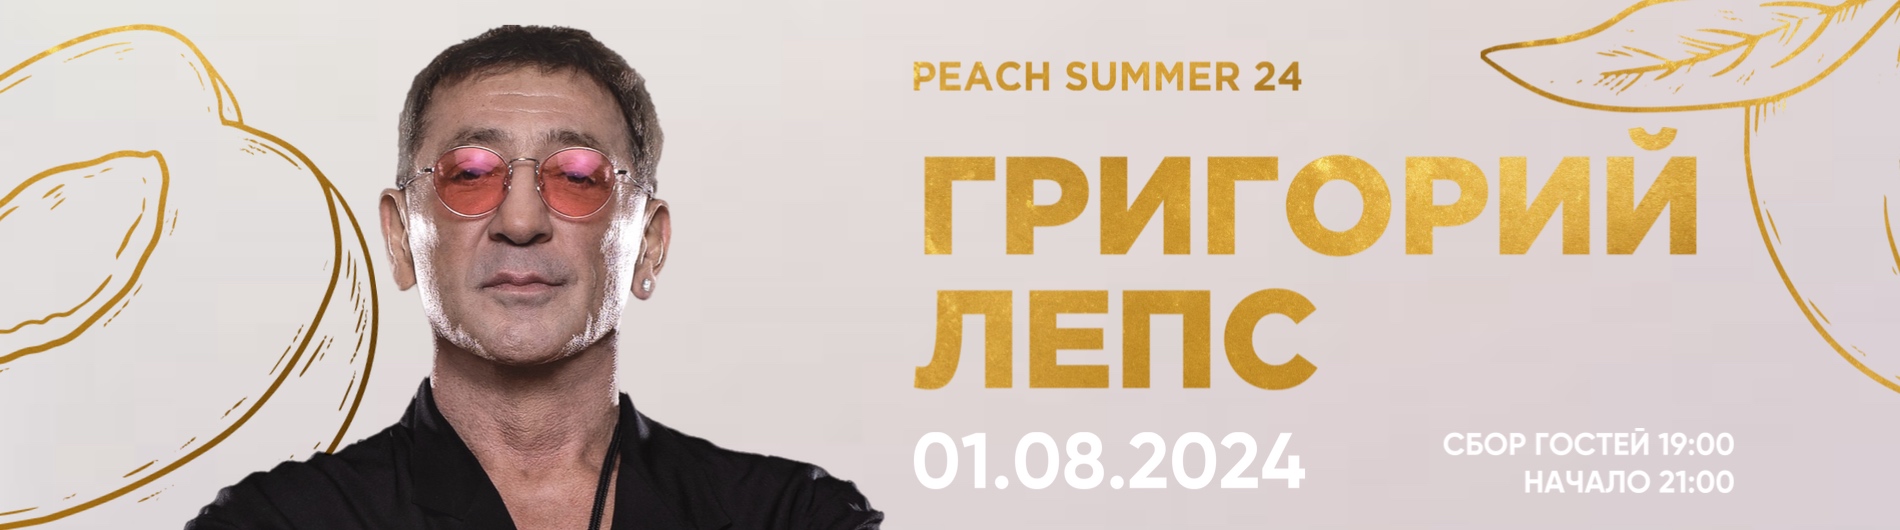 Григорий Лепс Peach